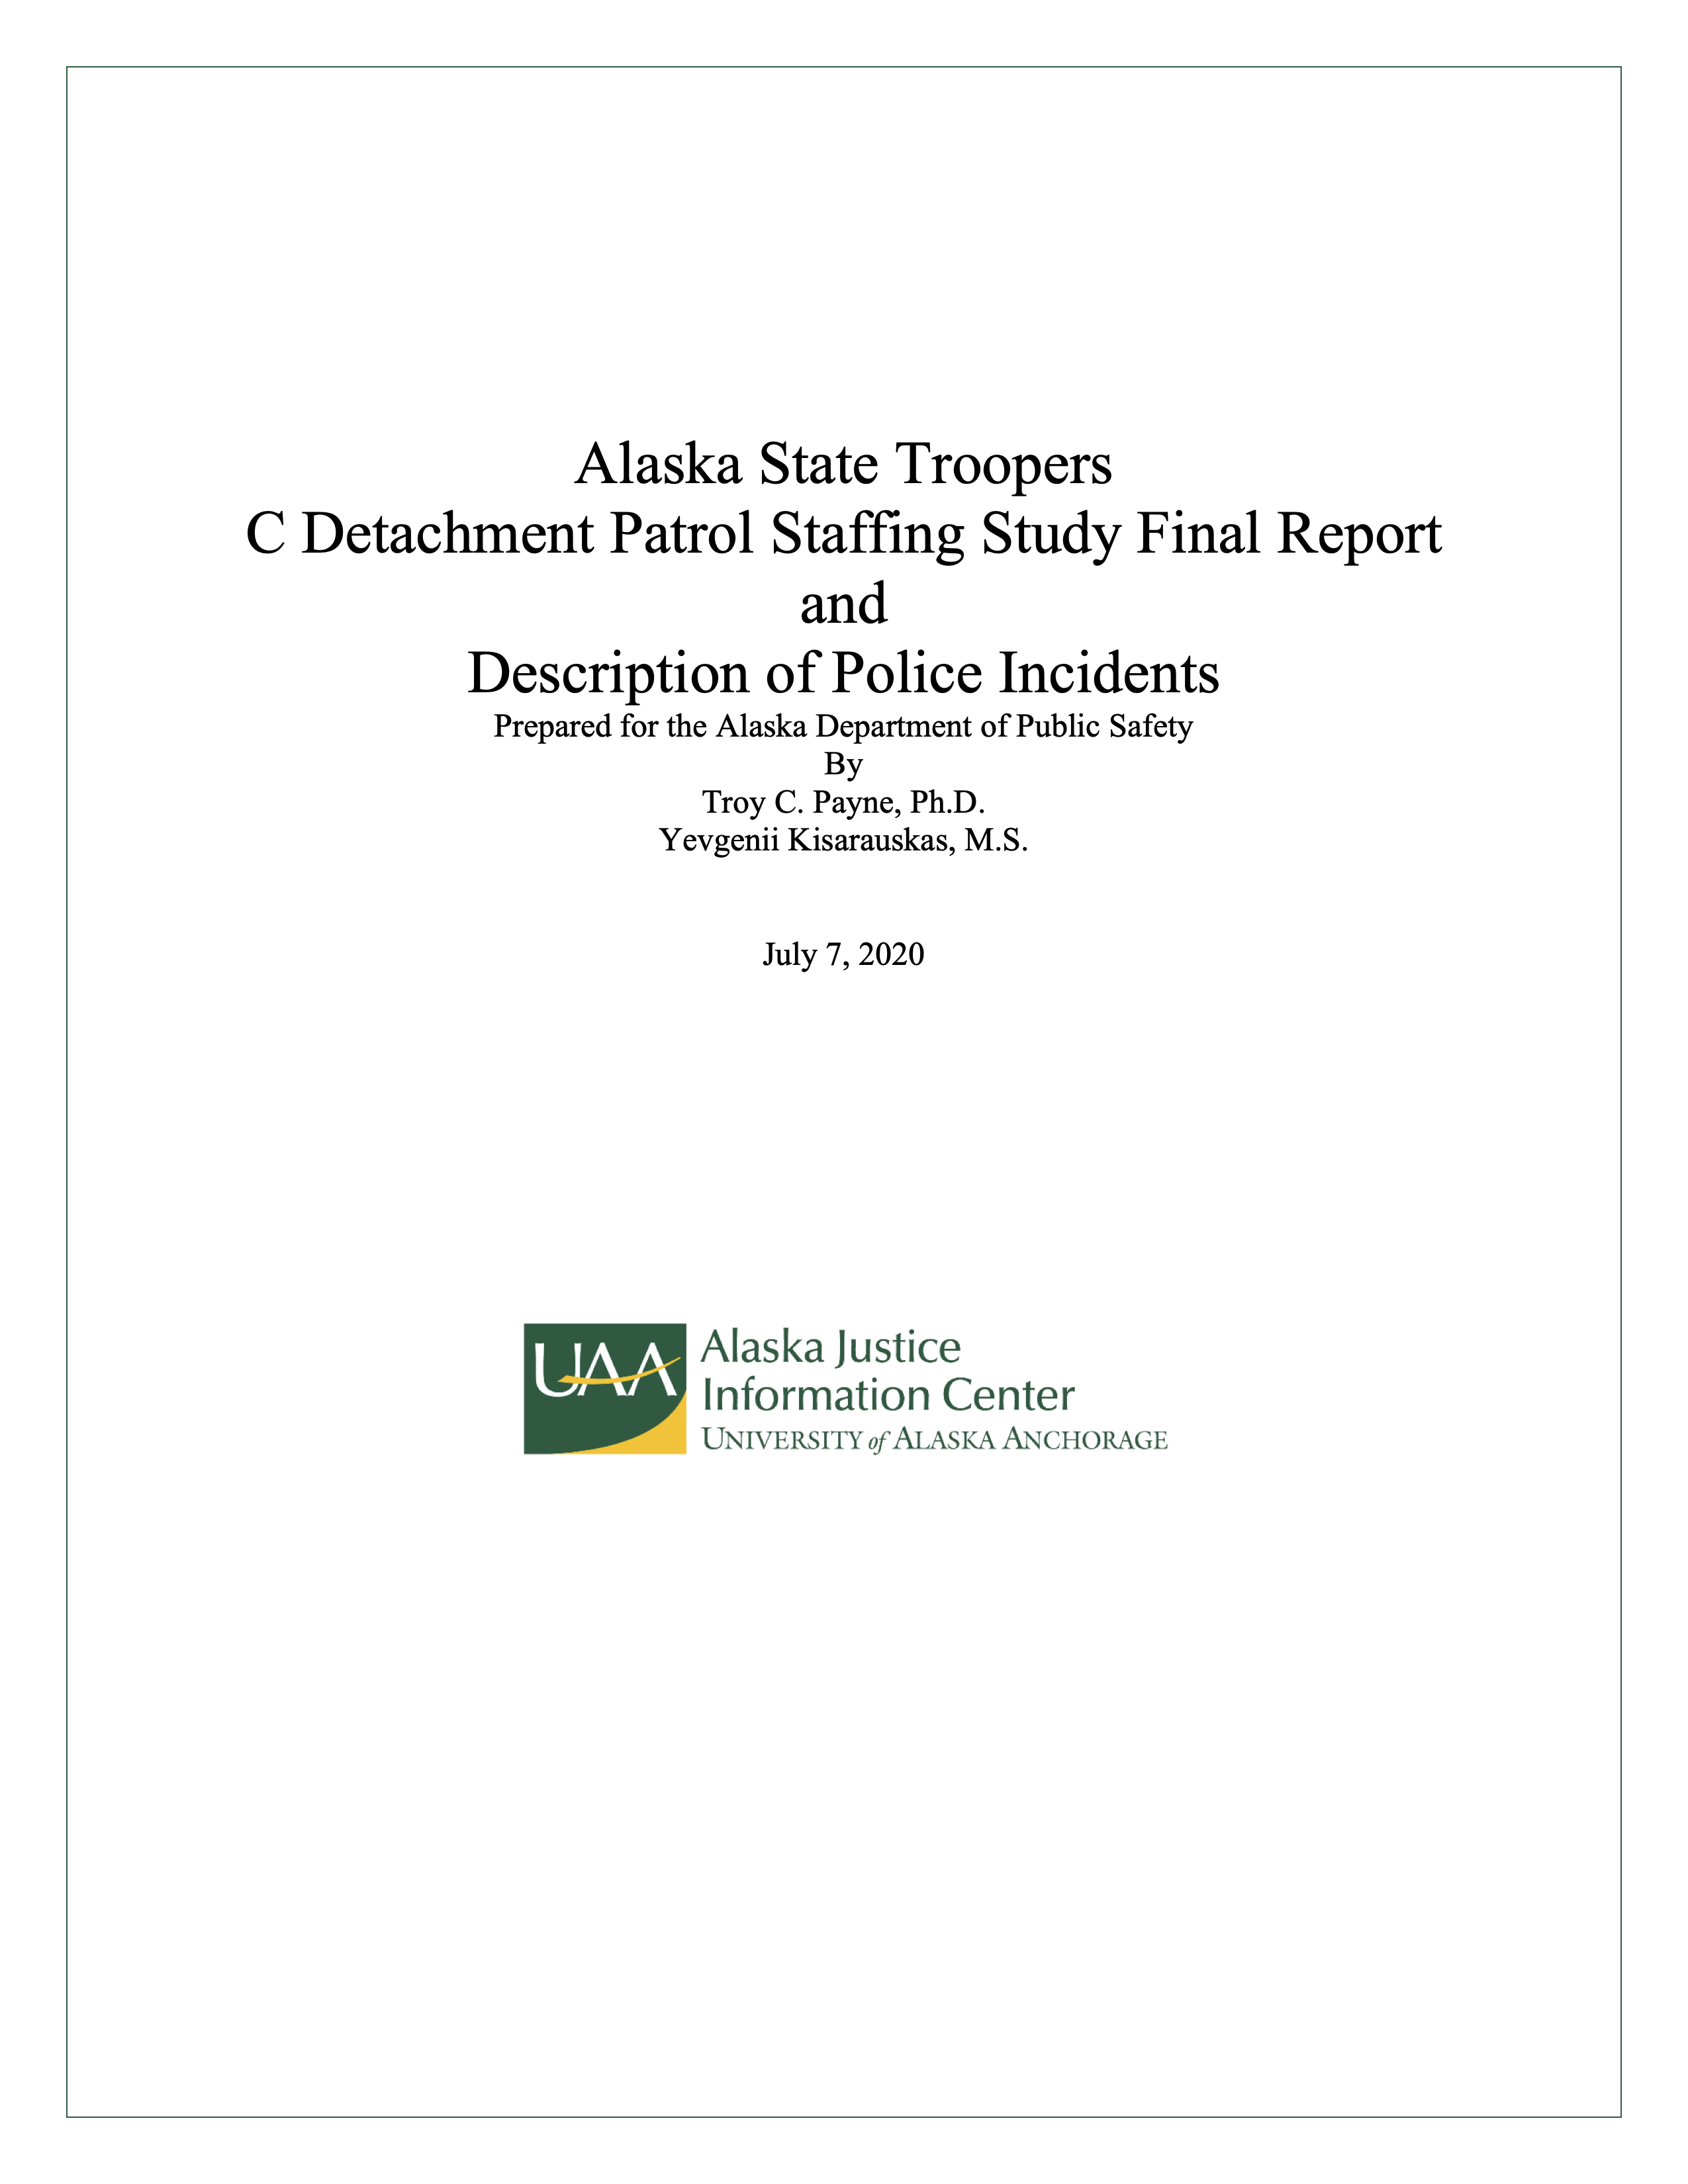 C Detachment Final Report